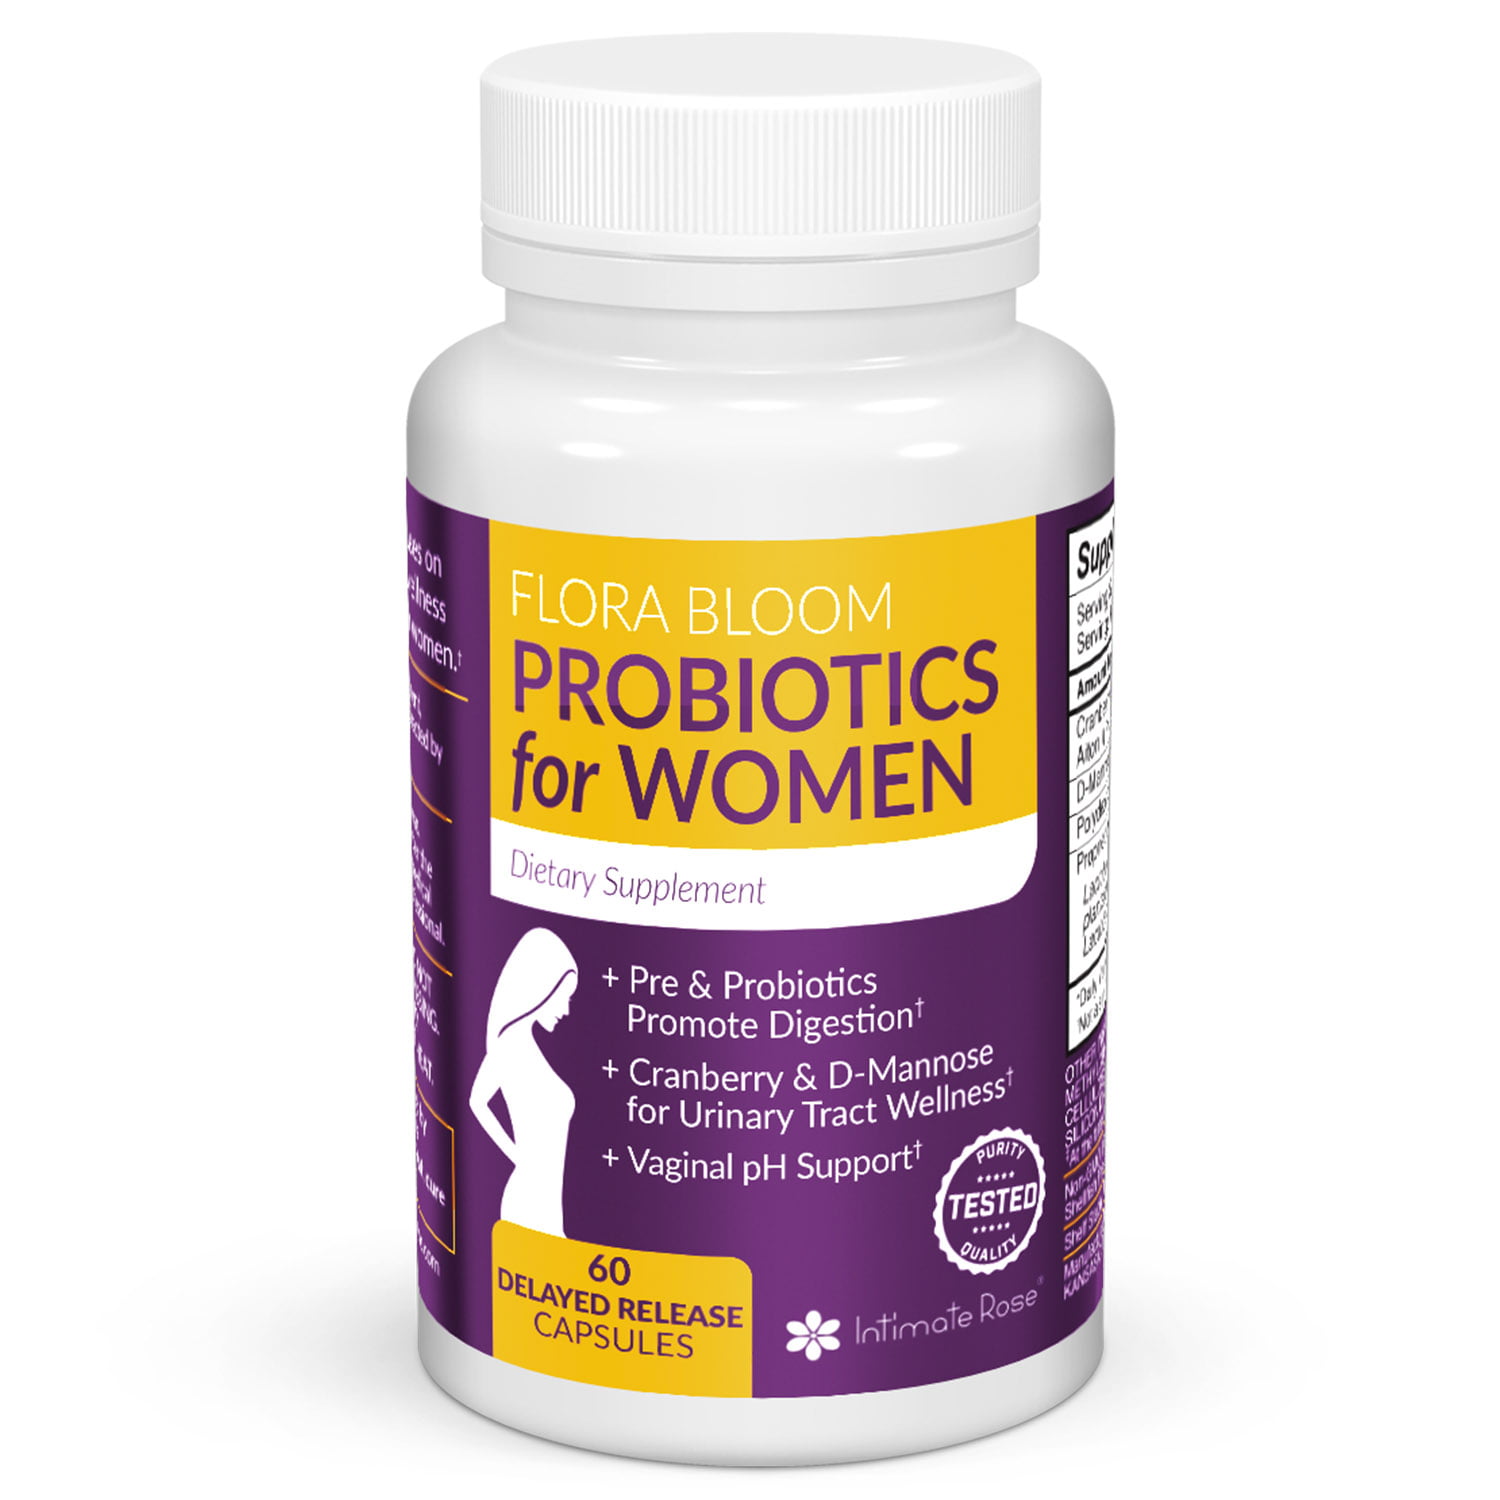 Probiotics 60 Billion Cfu - Dr. Approved ... - Amazon.com